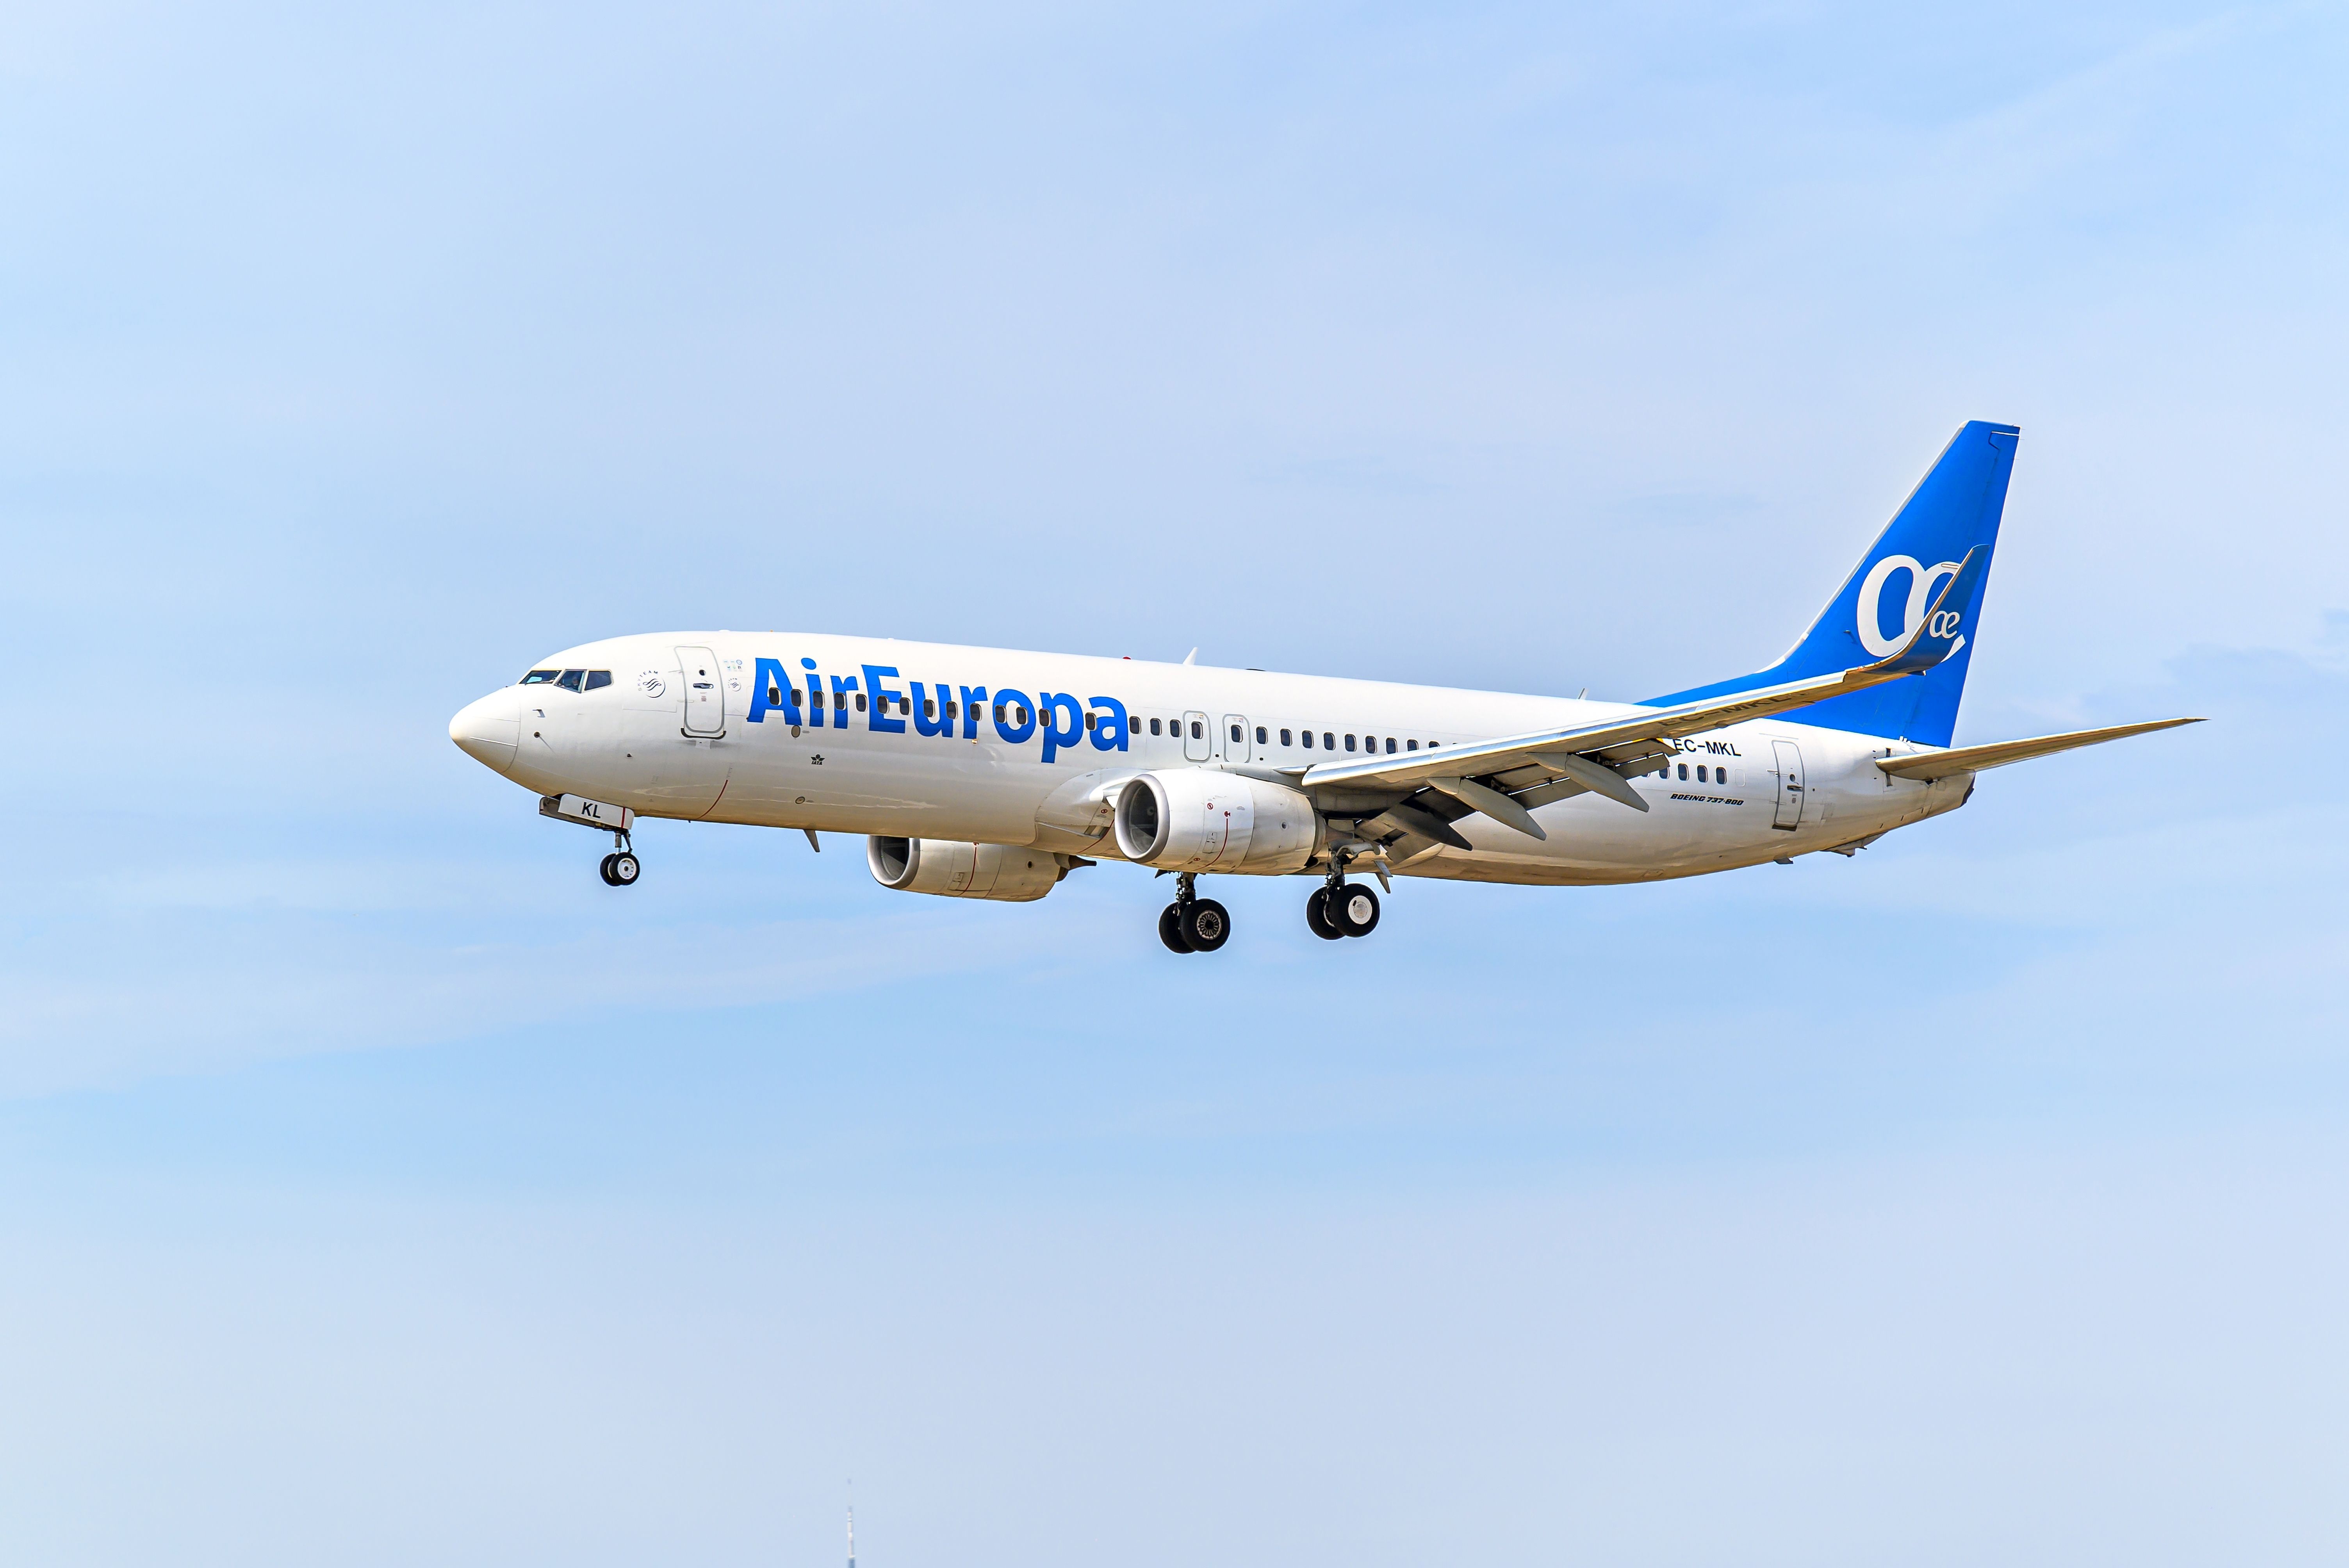 Air Europa Boeing 737 Landing In Barcelona